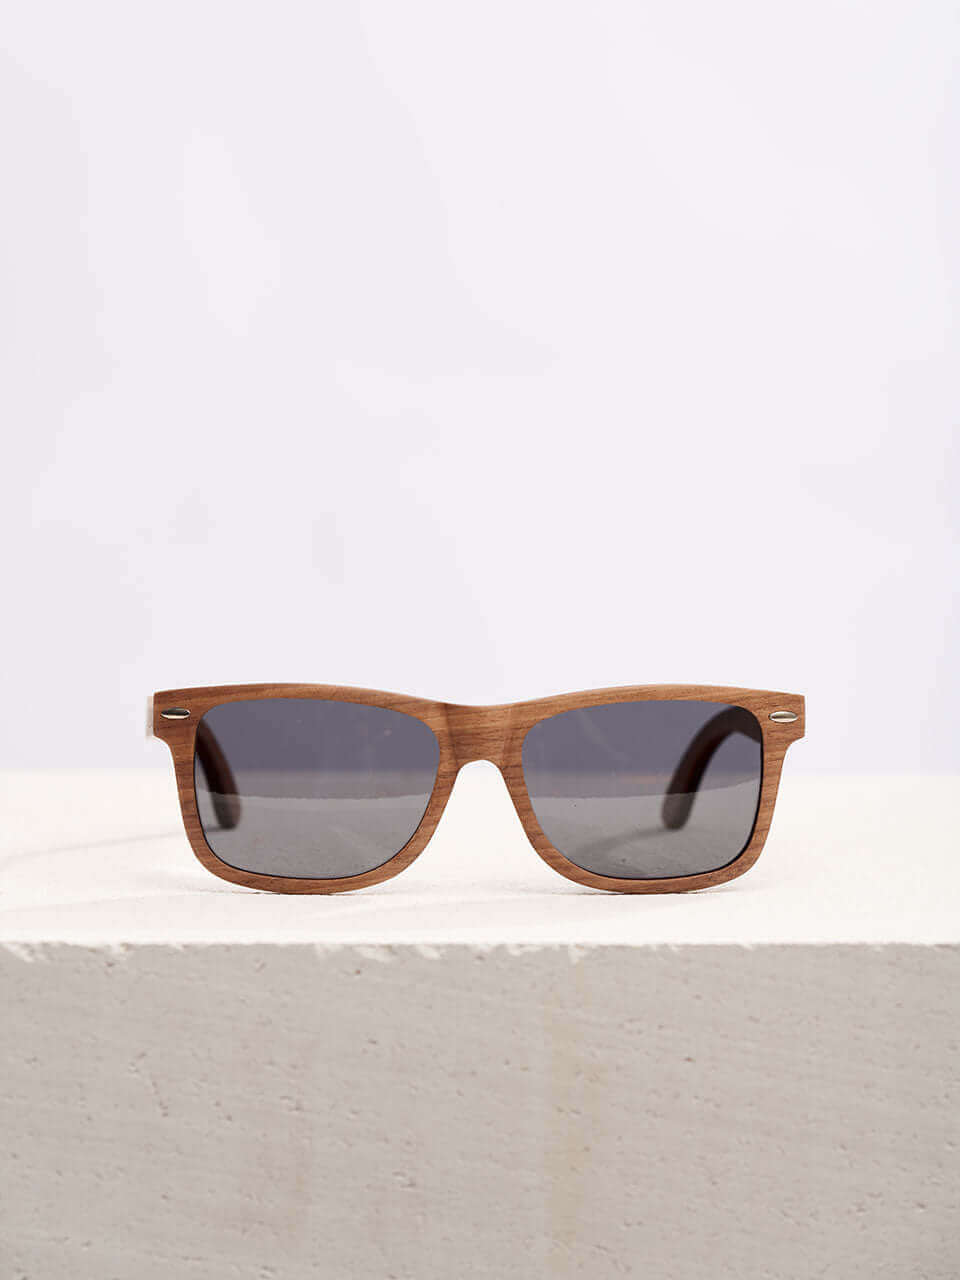 wooden sunglasses kept on a white platform